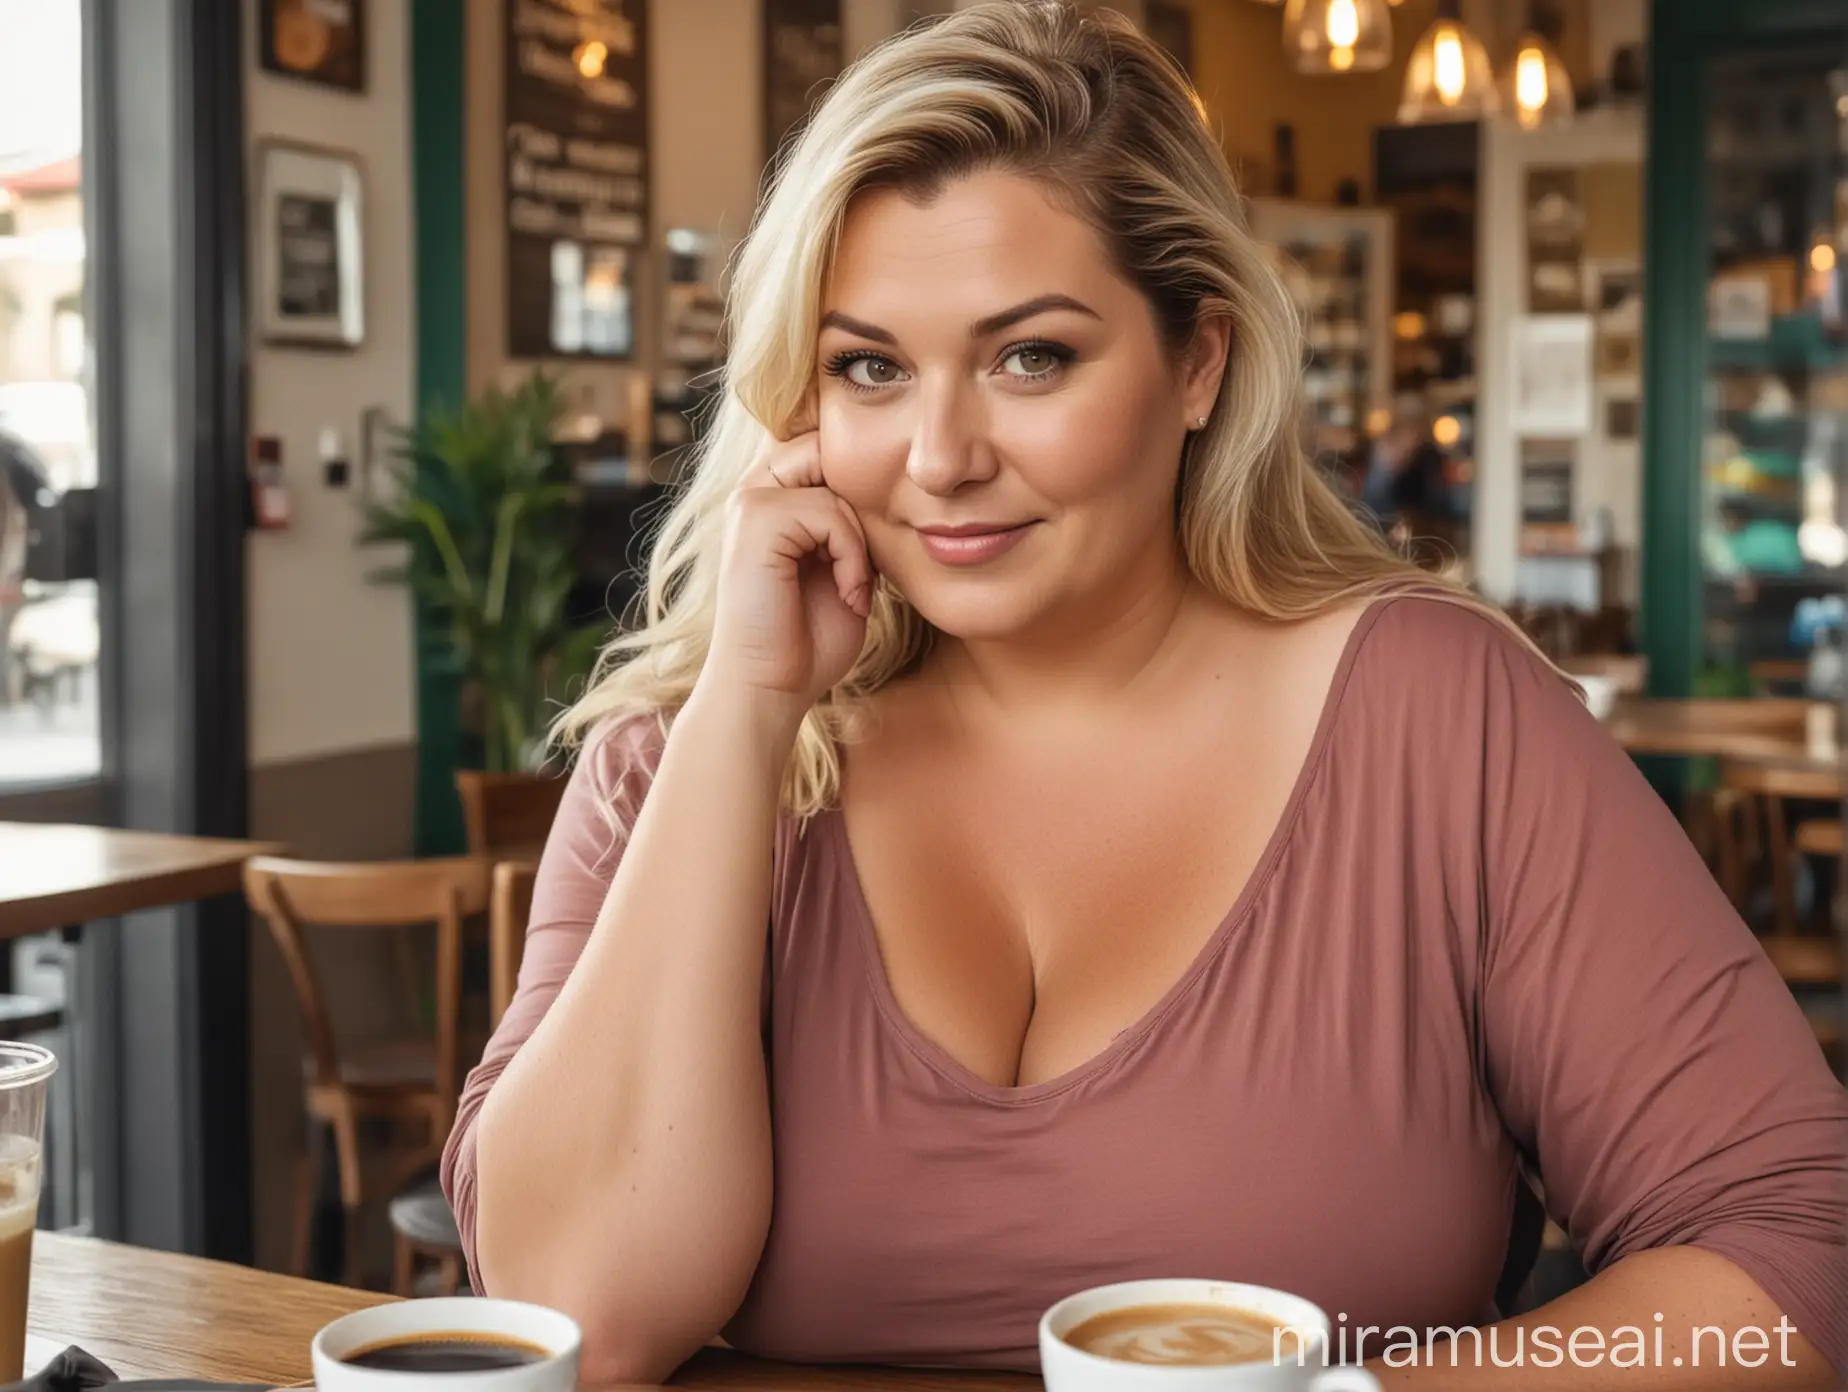 Chic Curvy Plus Size Woman Enjoying Coffee in Cozy Cafe